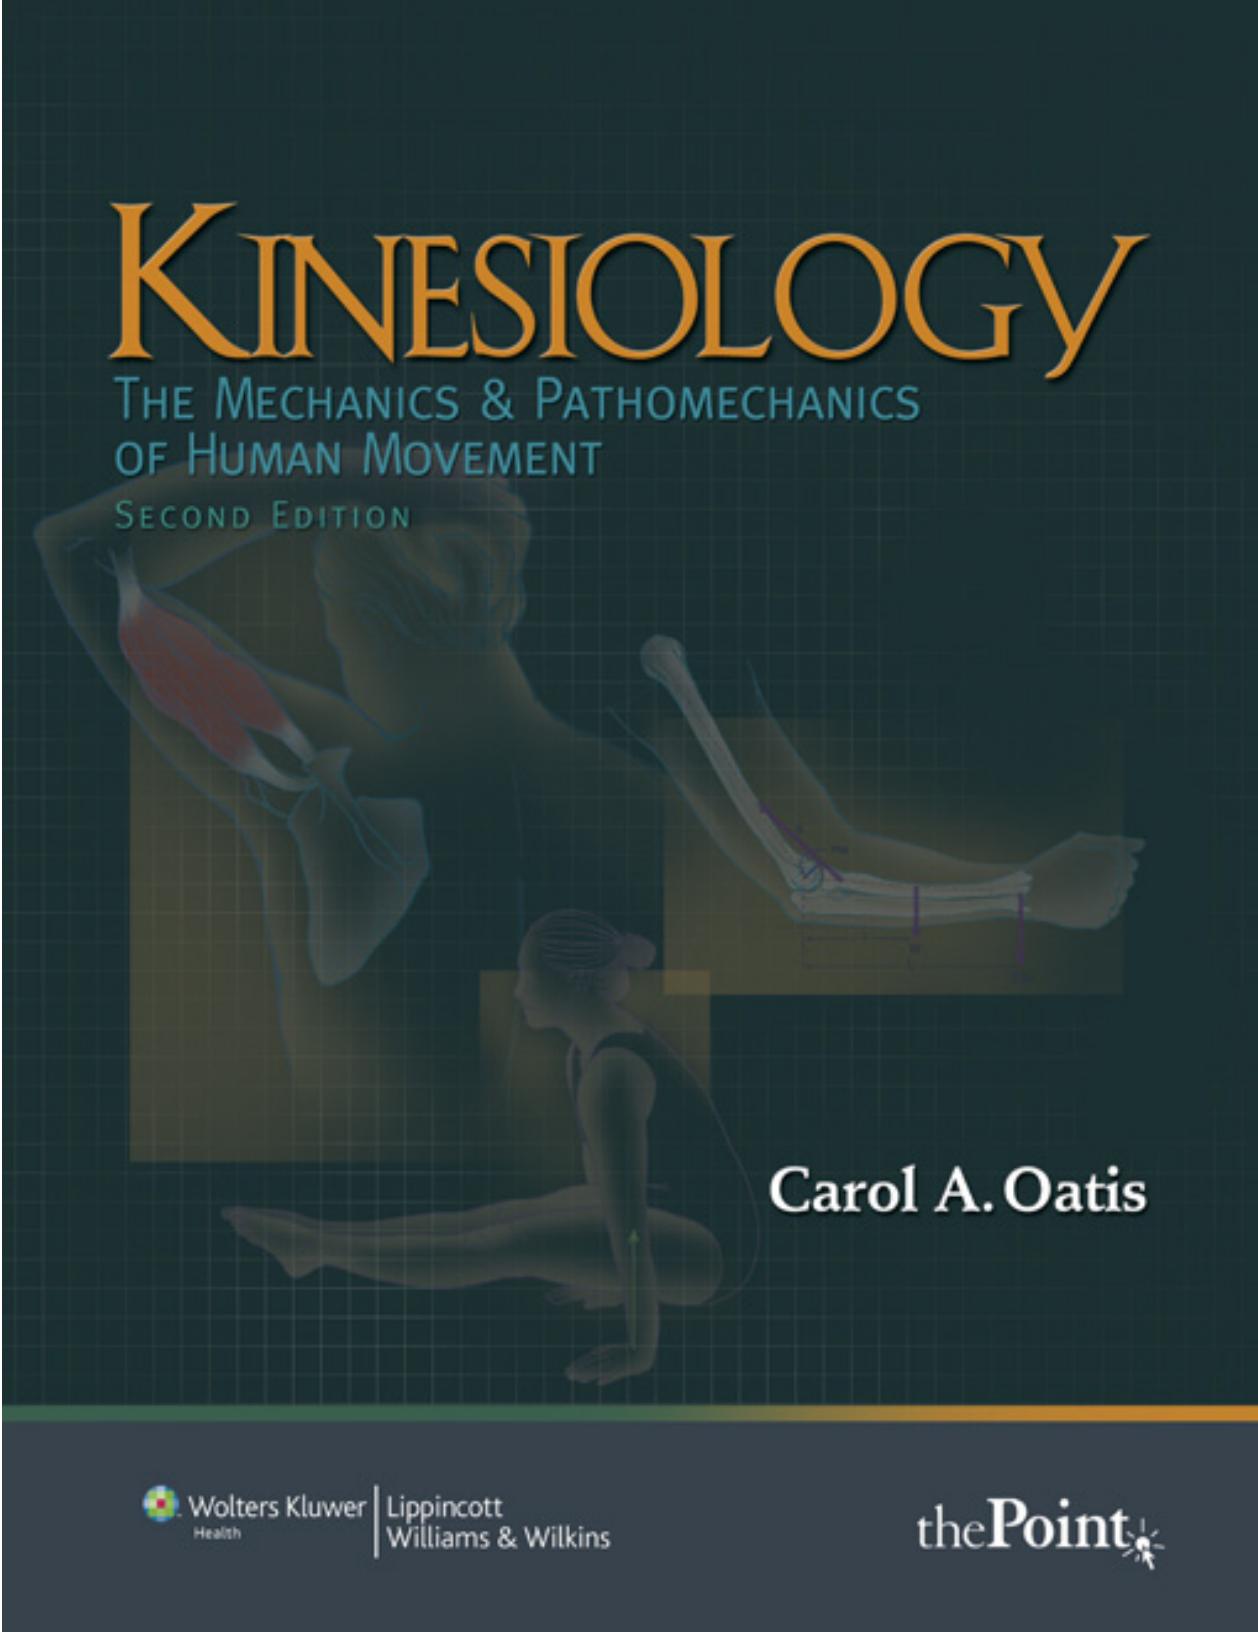 Kinesiology: The Mechanics and Pathomechanics of Human Movement by Carol A. Oatis